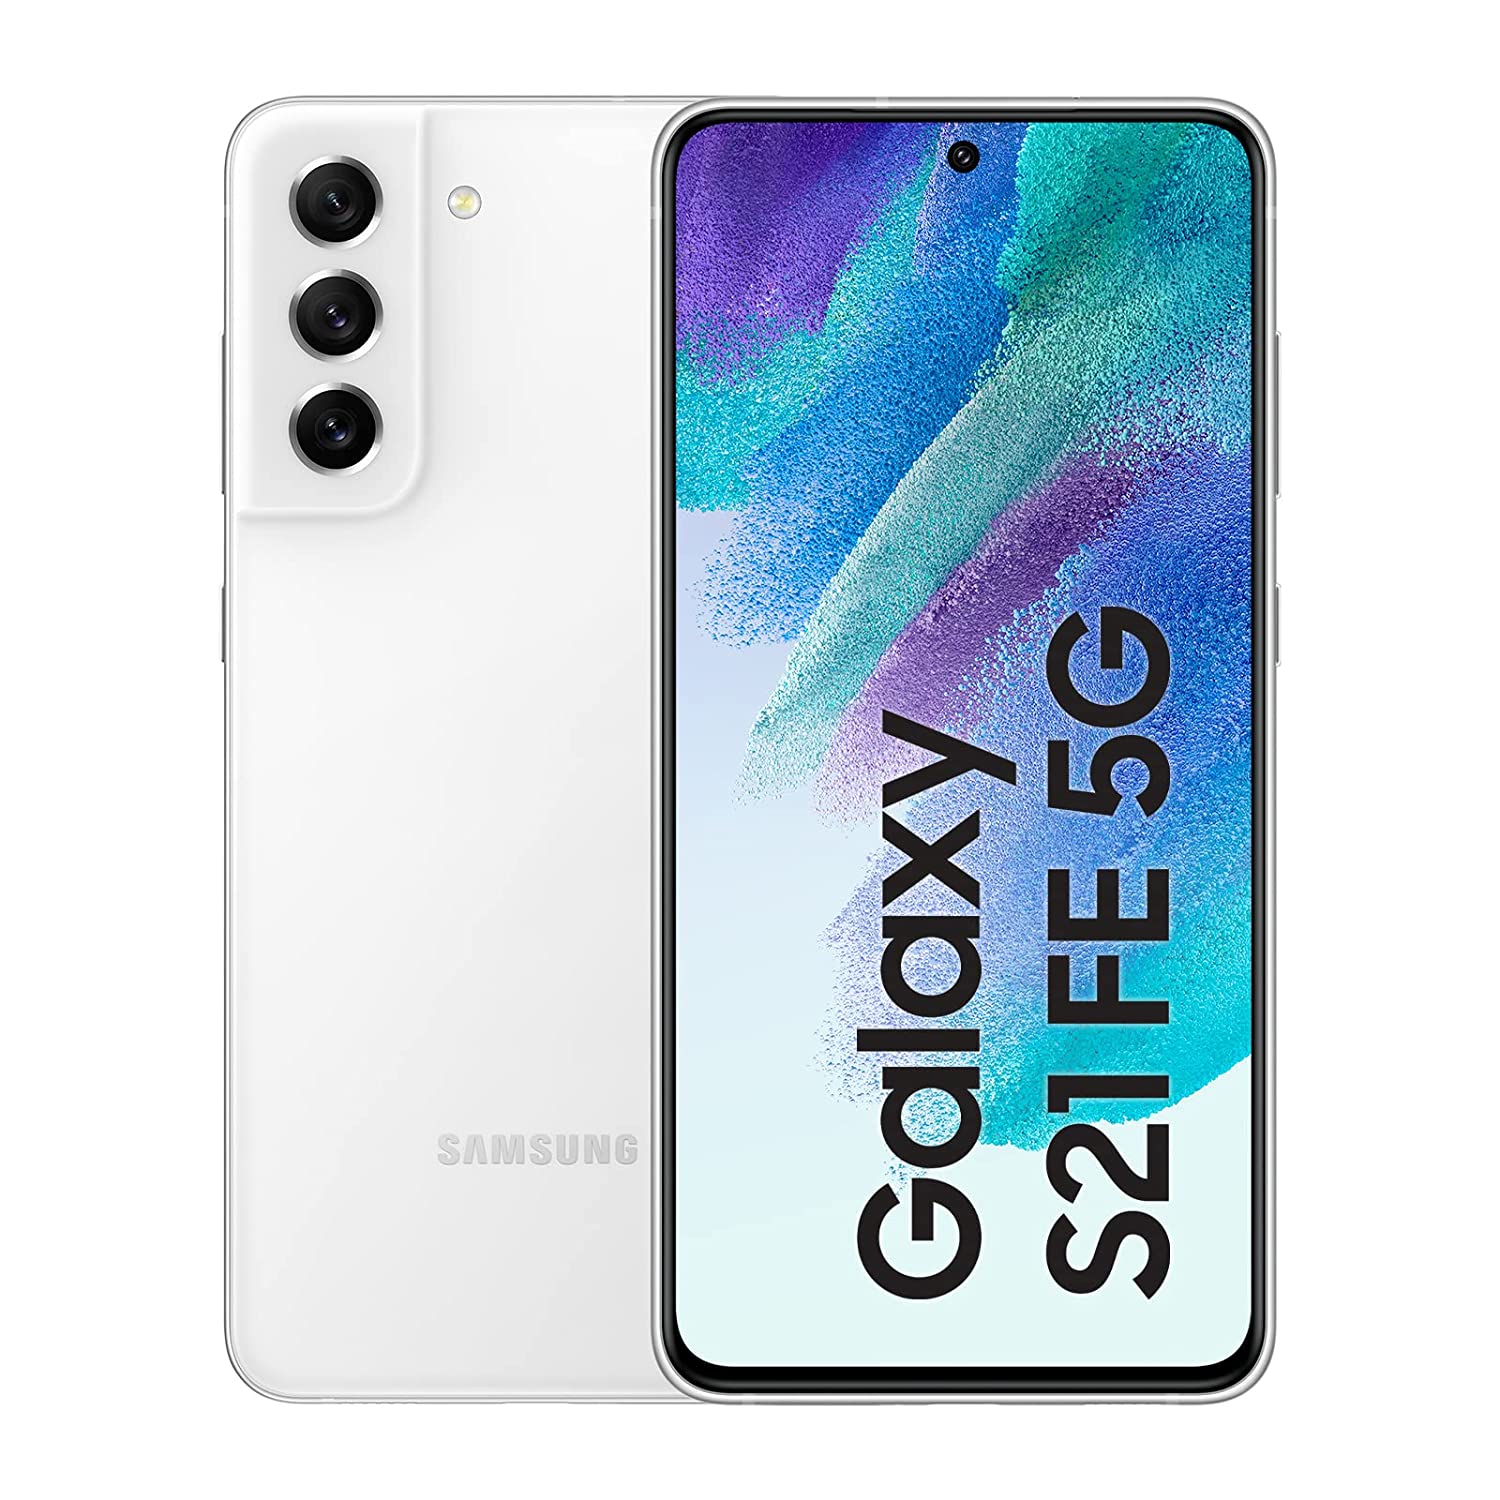 SAMSUNG GALAXY S21 FE 5G (8+128GB), White